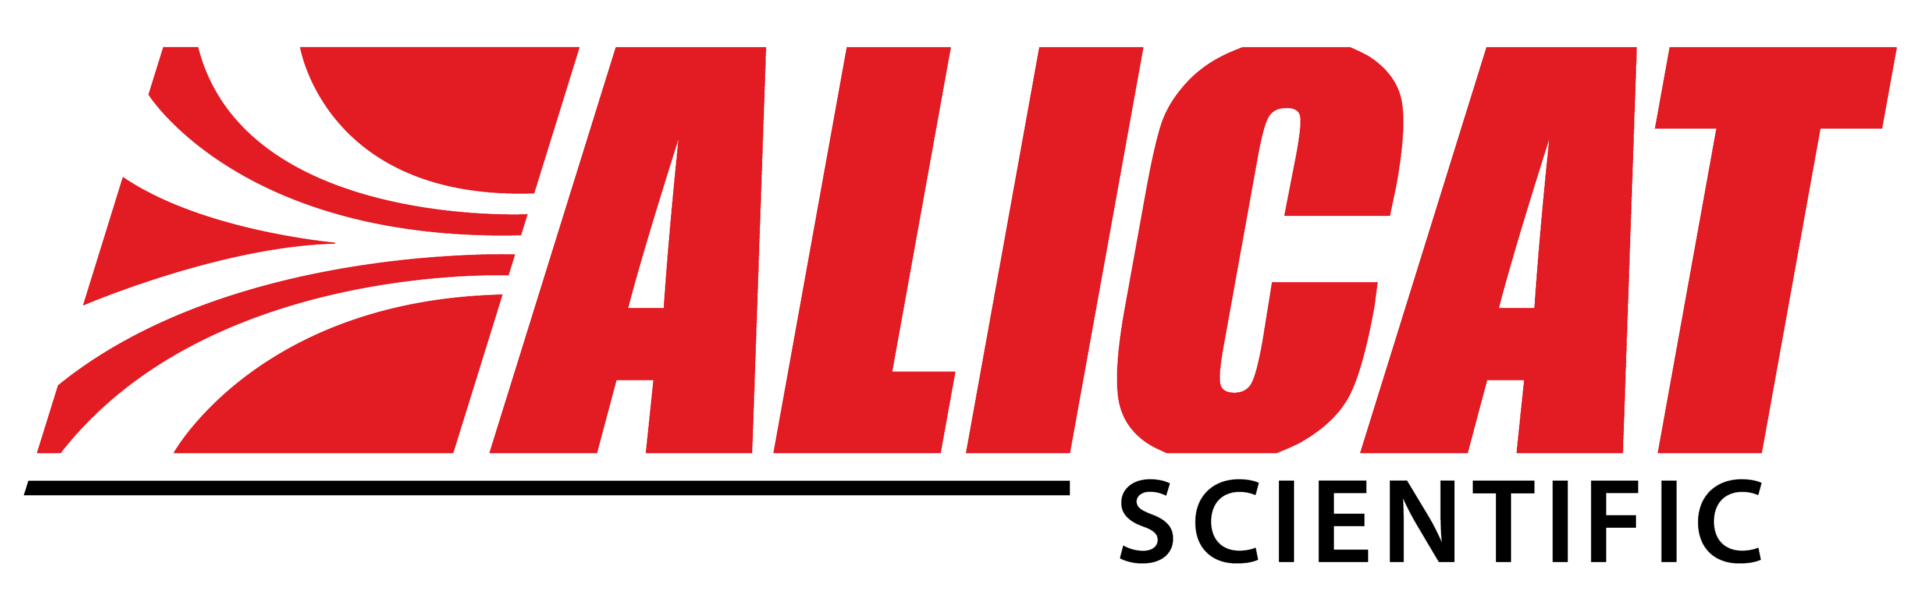 Alicat-logo-ConW